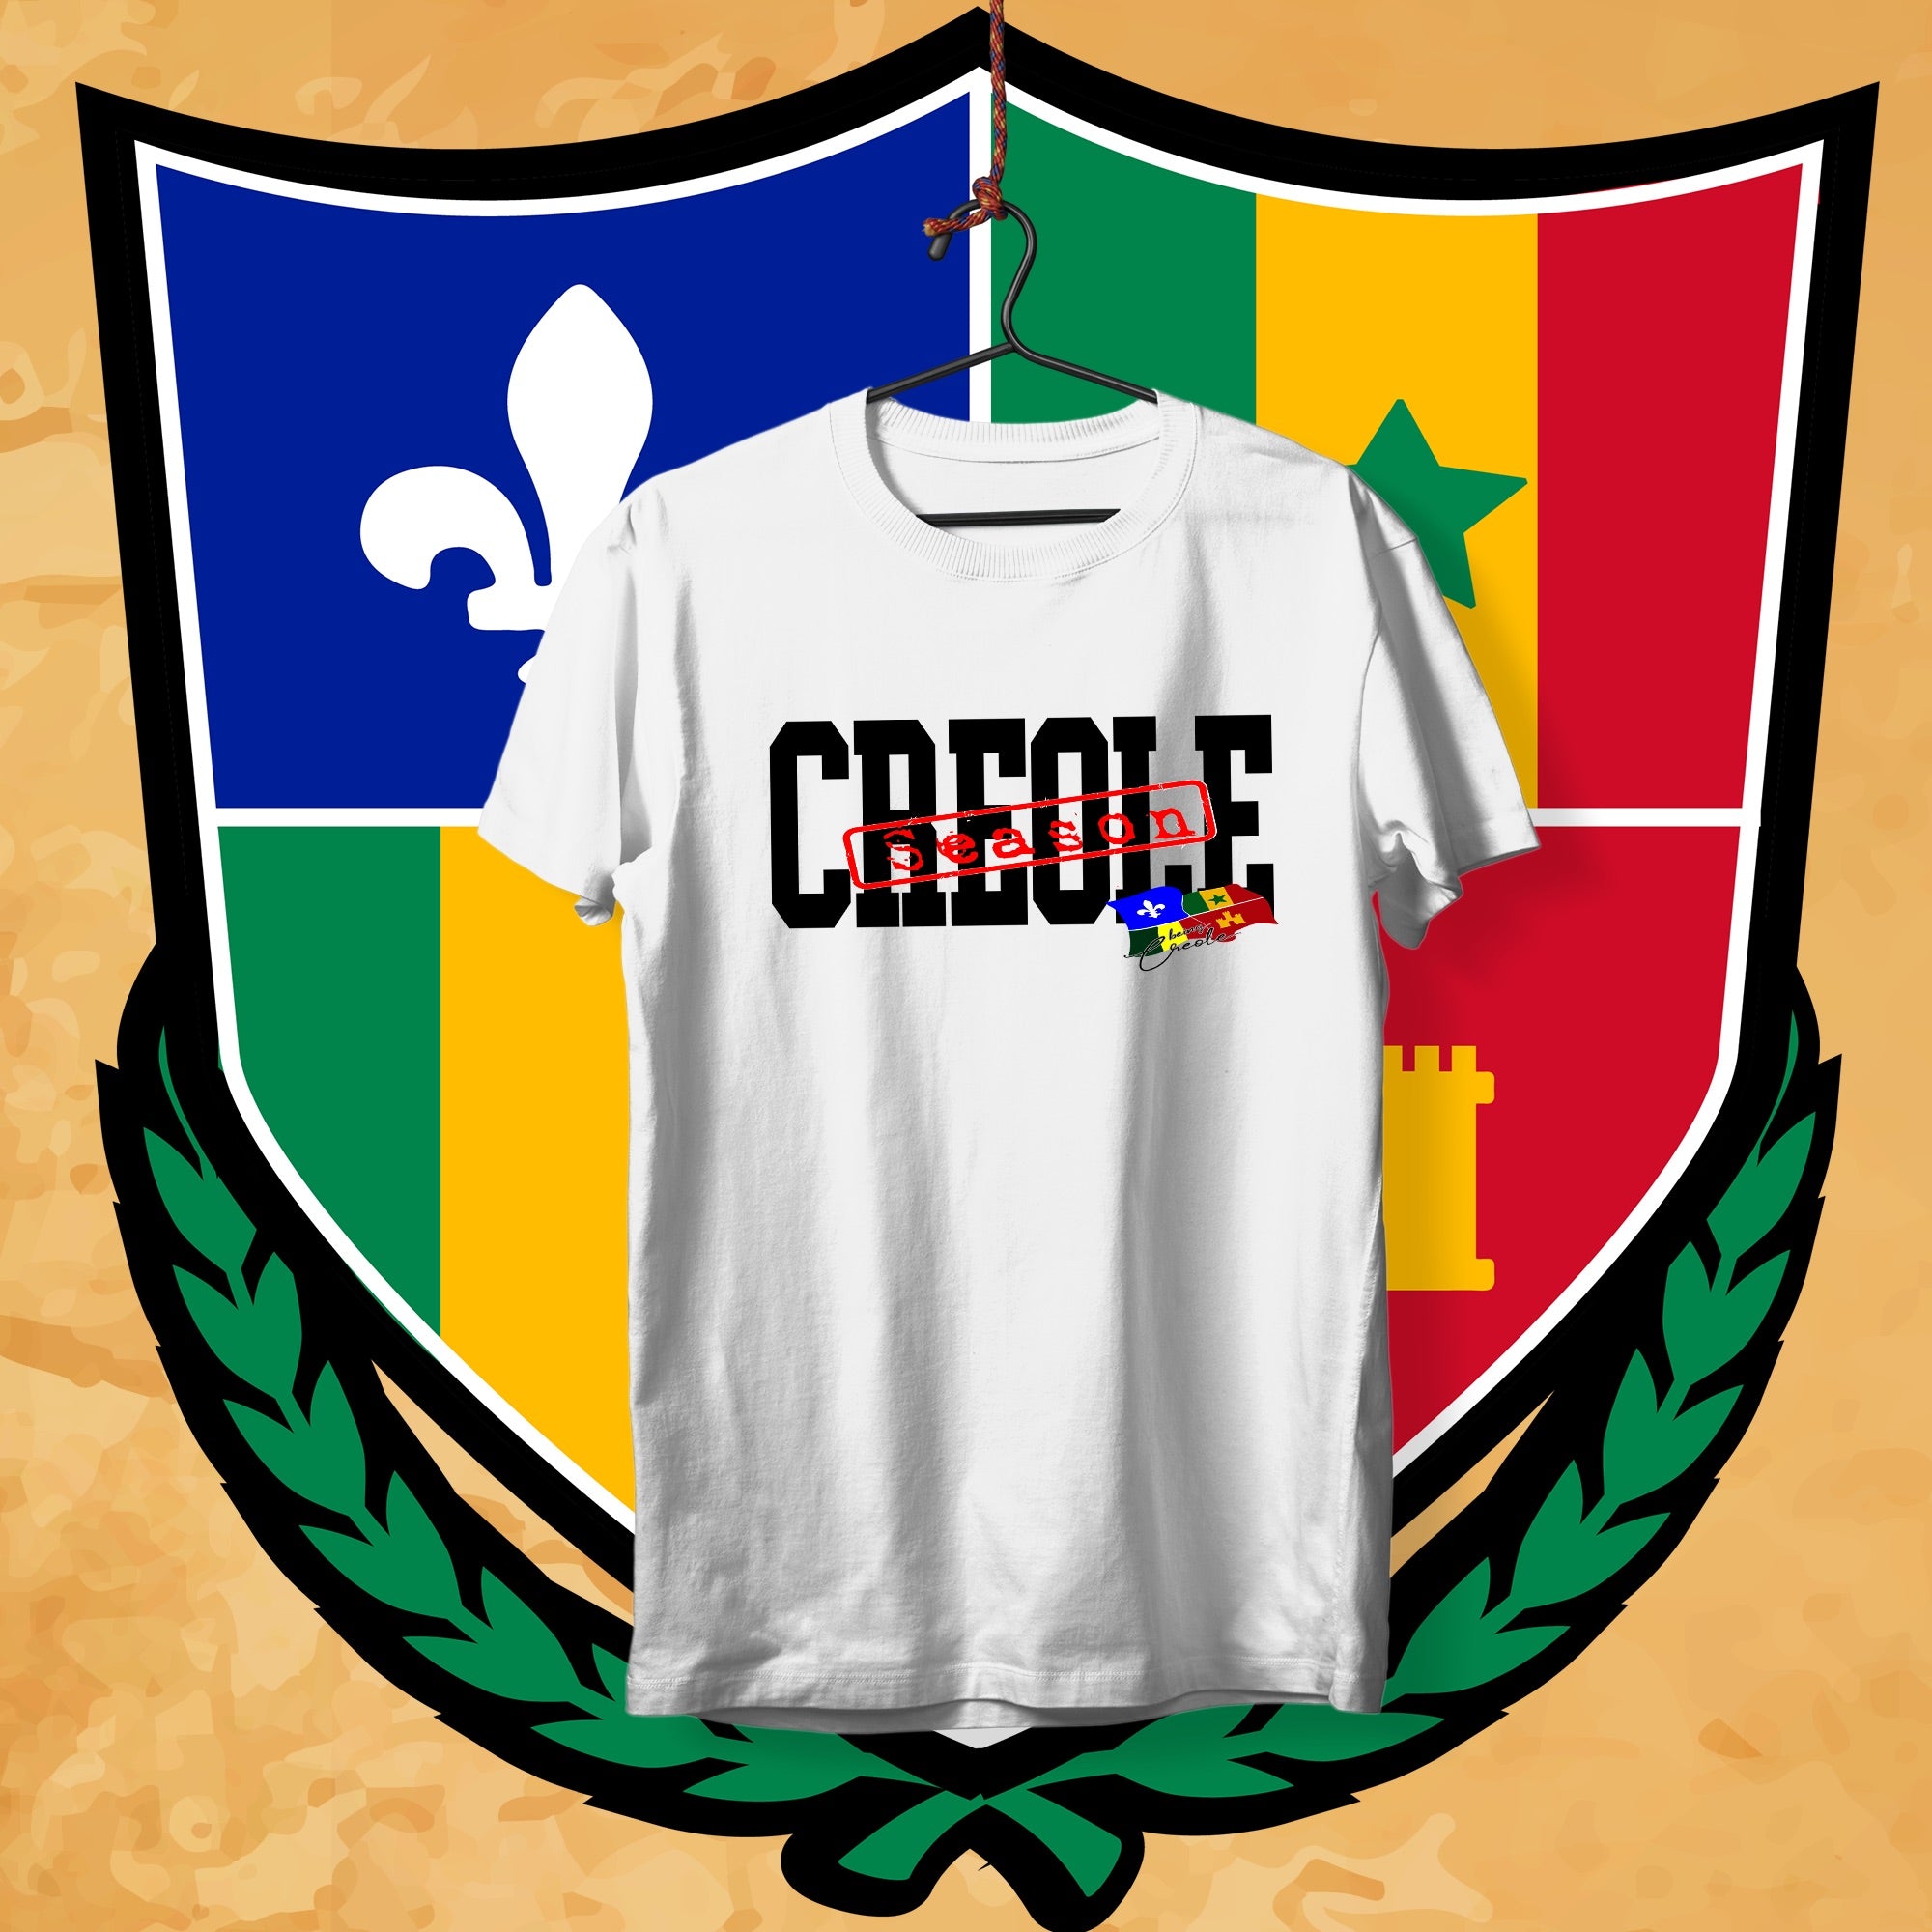 Creole Woman Louisiana Cultural Flag' Women's T-Shirt